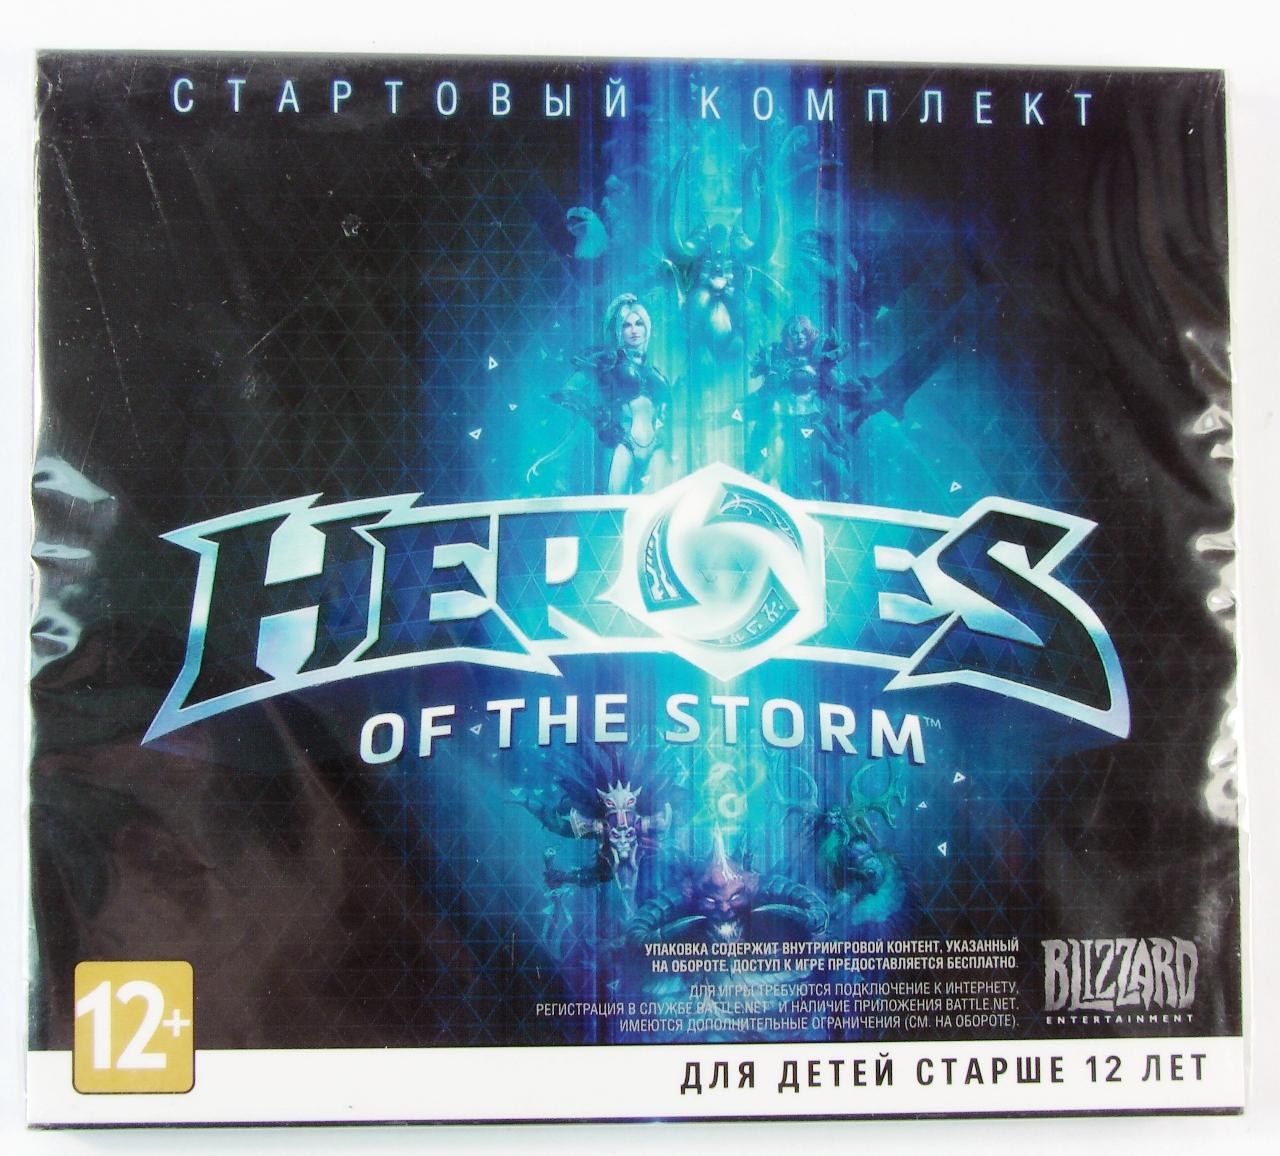 Компьютерный компакт-диск Heroes of the Storm (PC), фирма "Blizzard", DVD